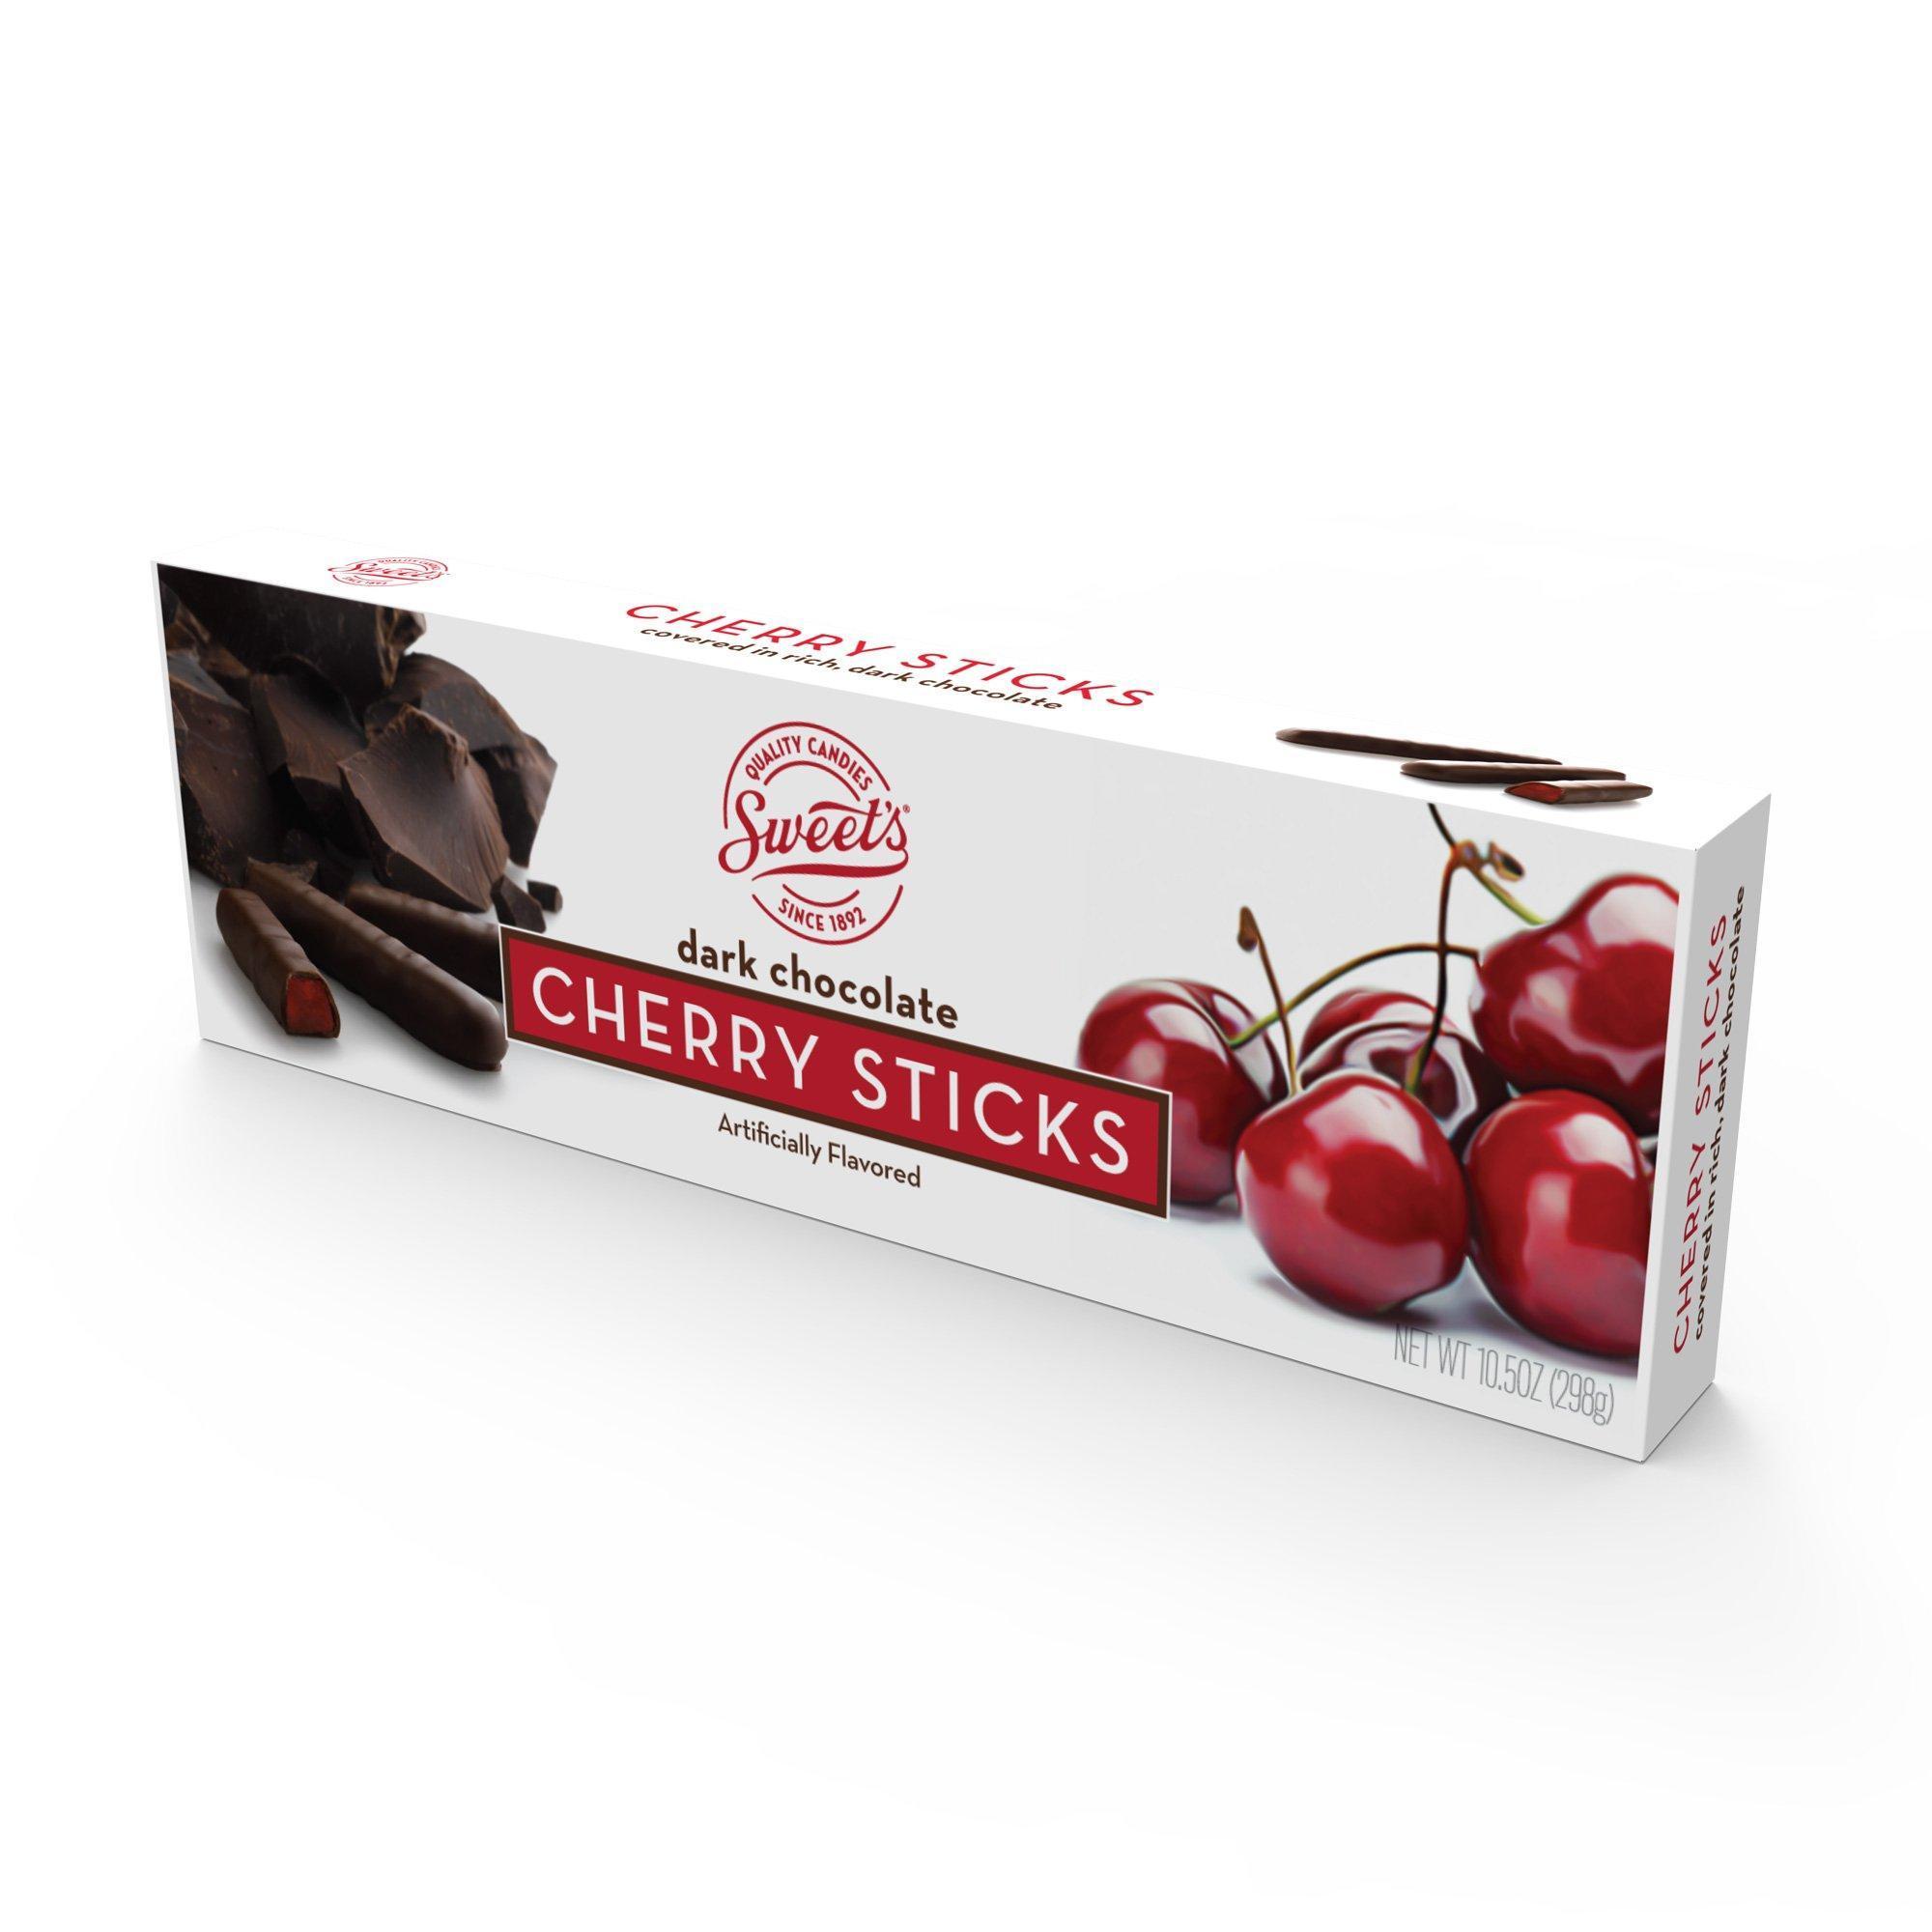 Dark Chocolate Cherry Sticks